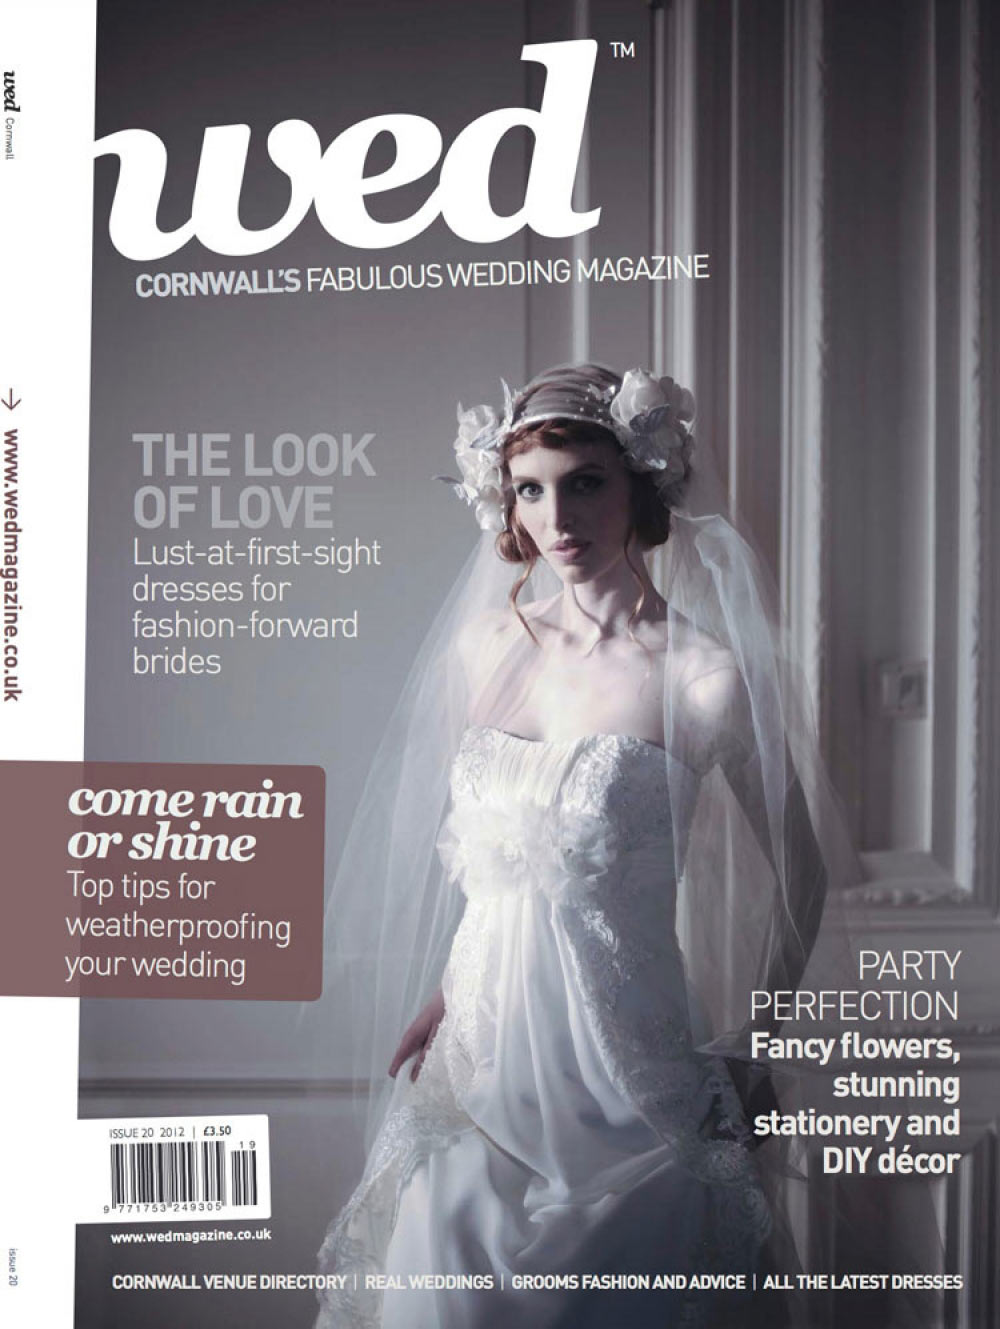 Cornwall Wed Magazine - Issue 20